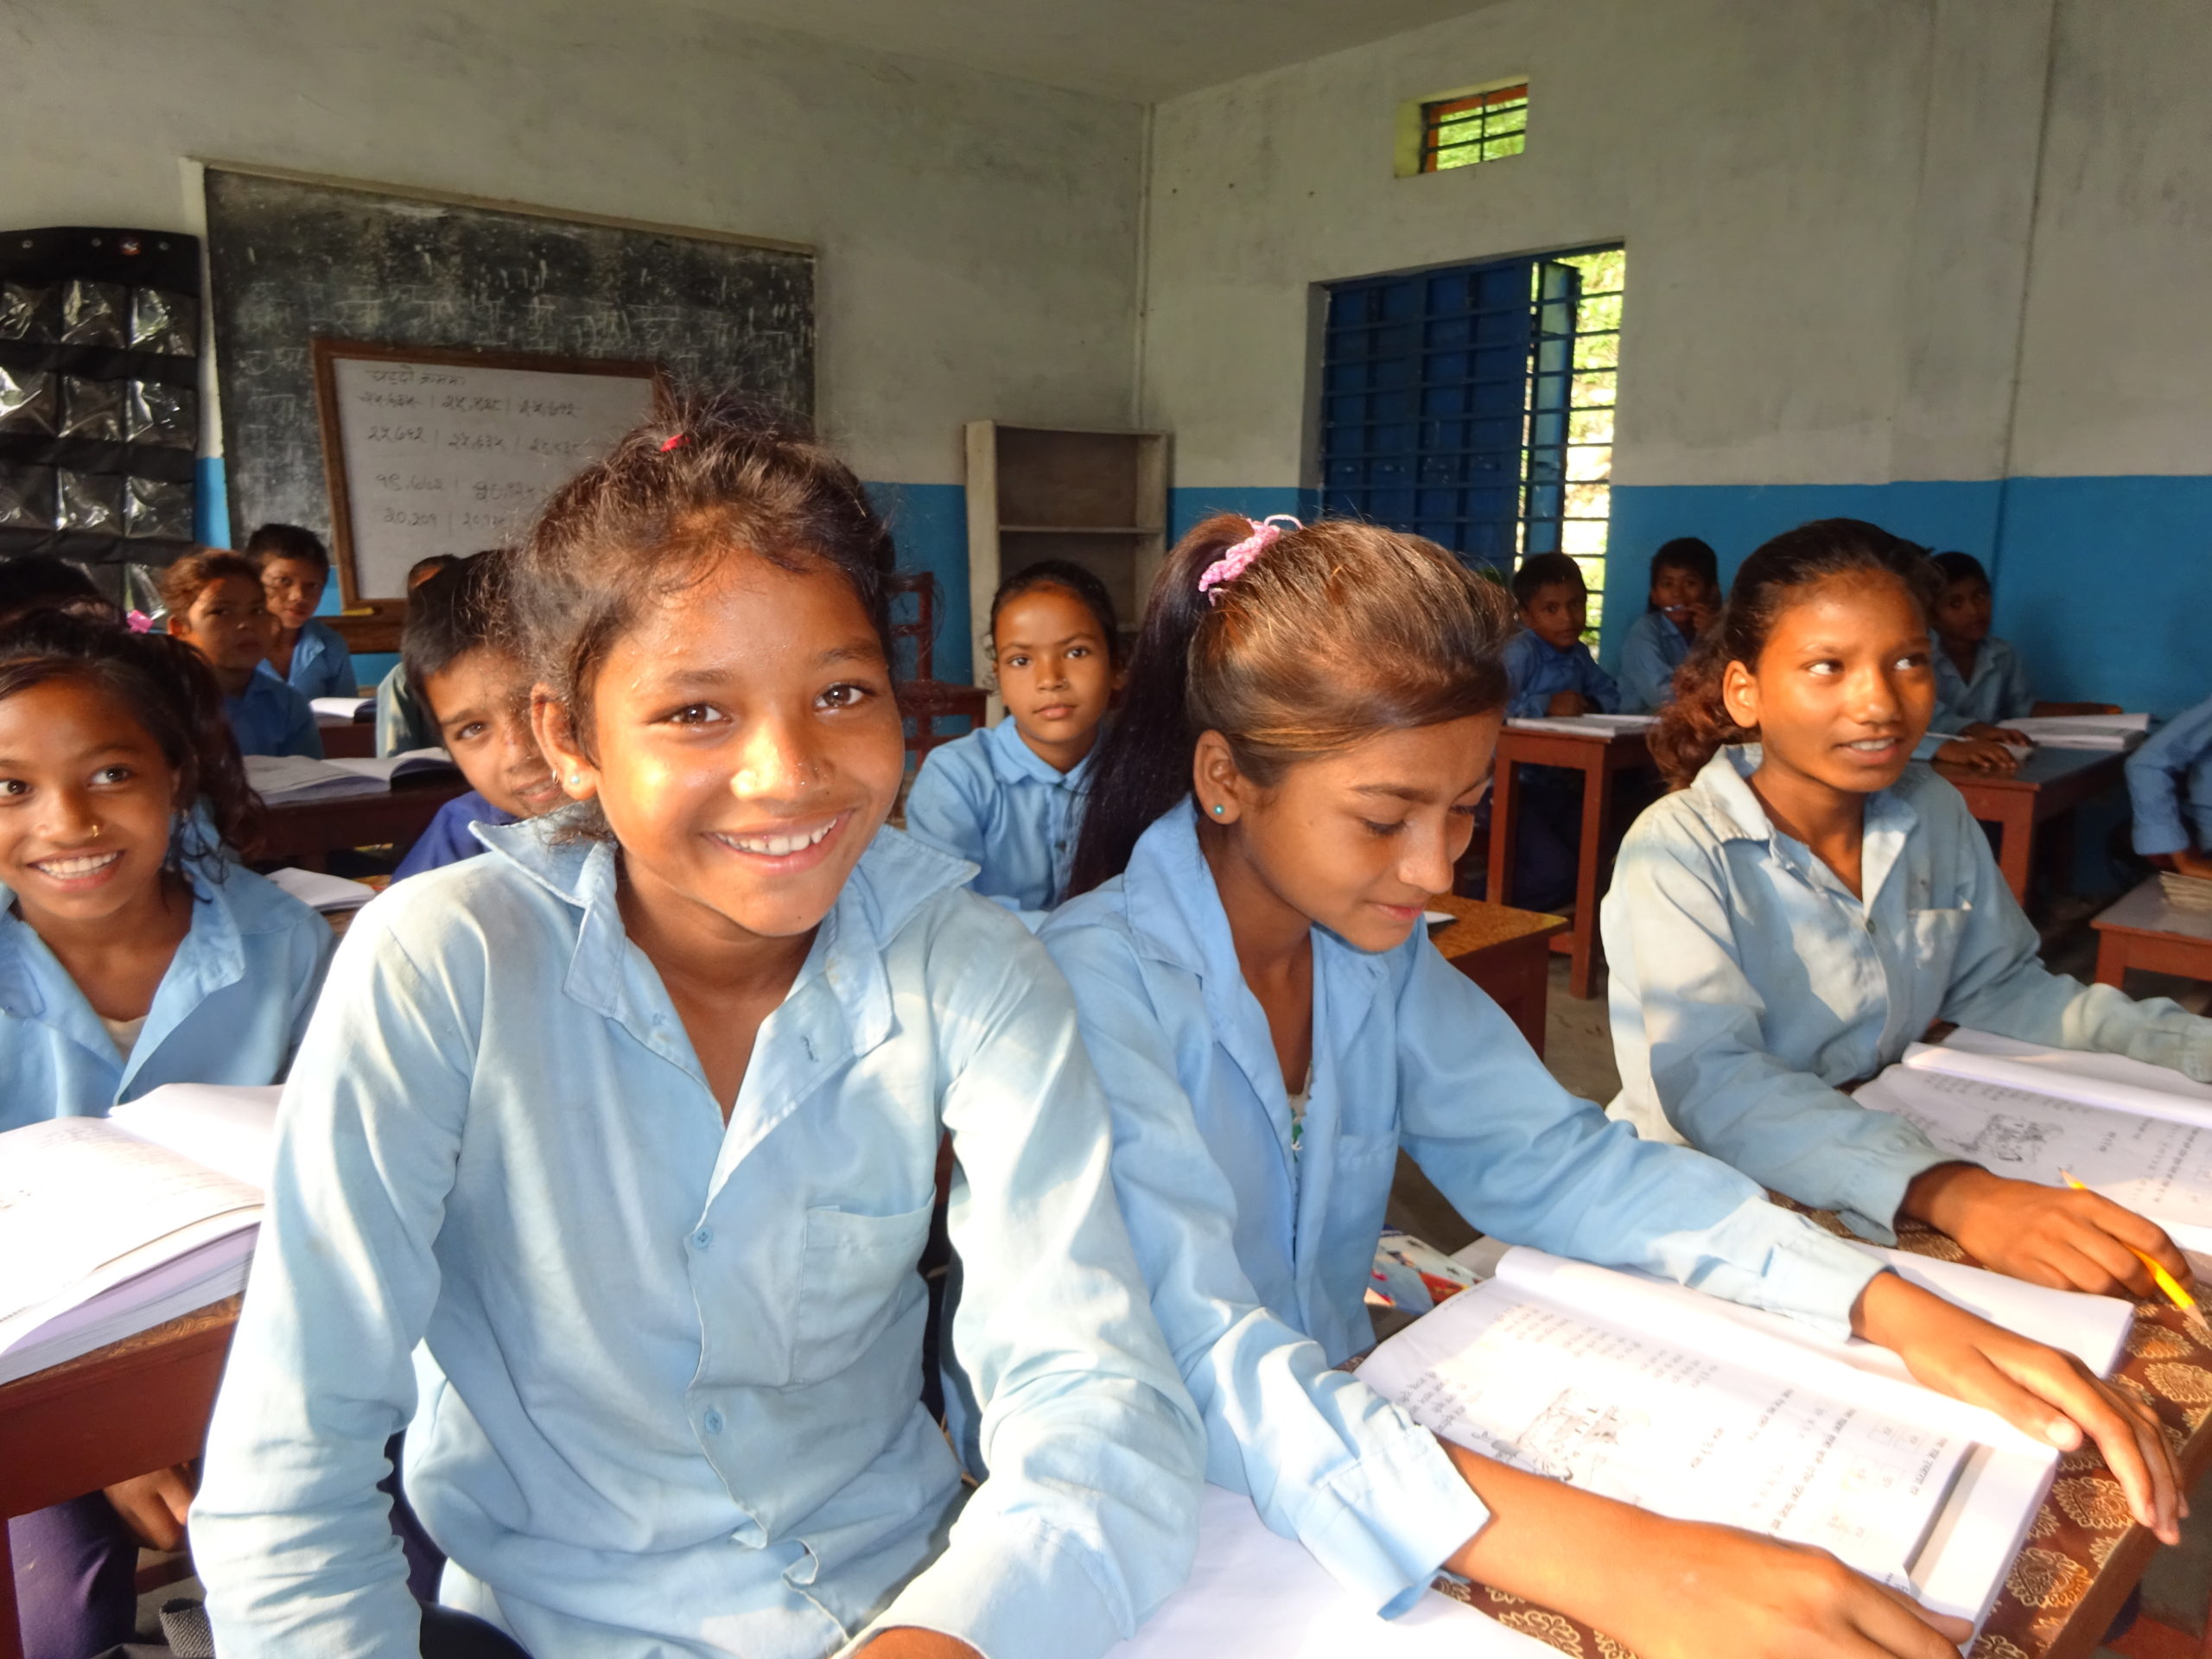 Students Classroom - Badiguan Nepal